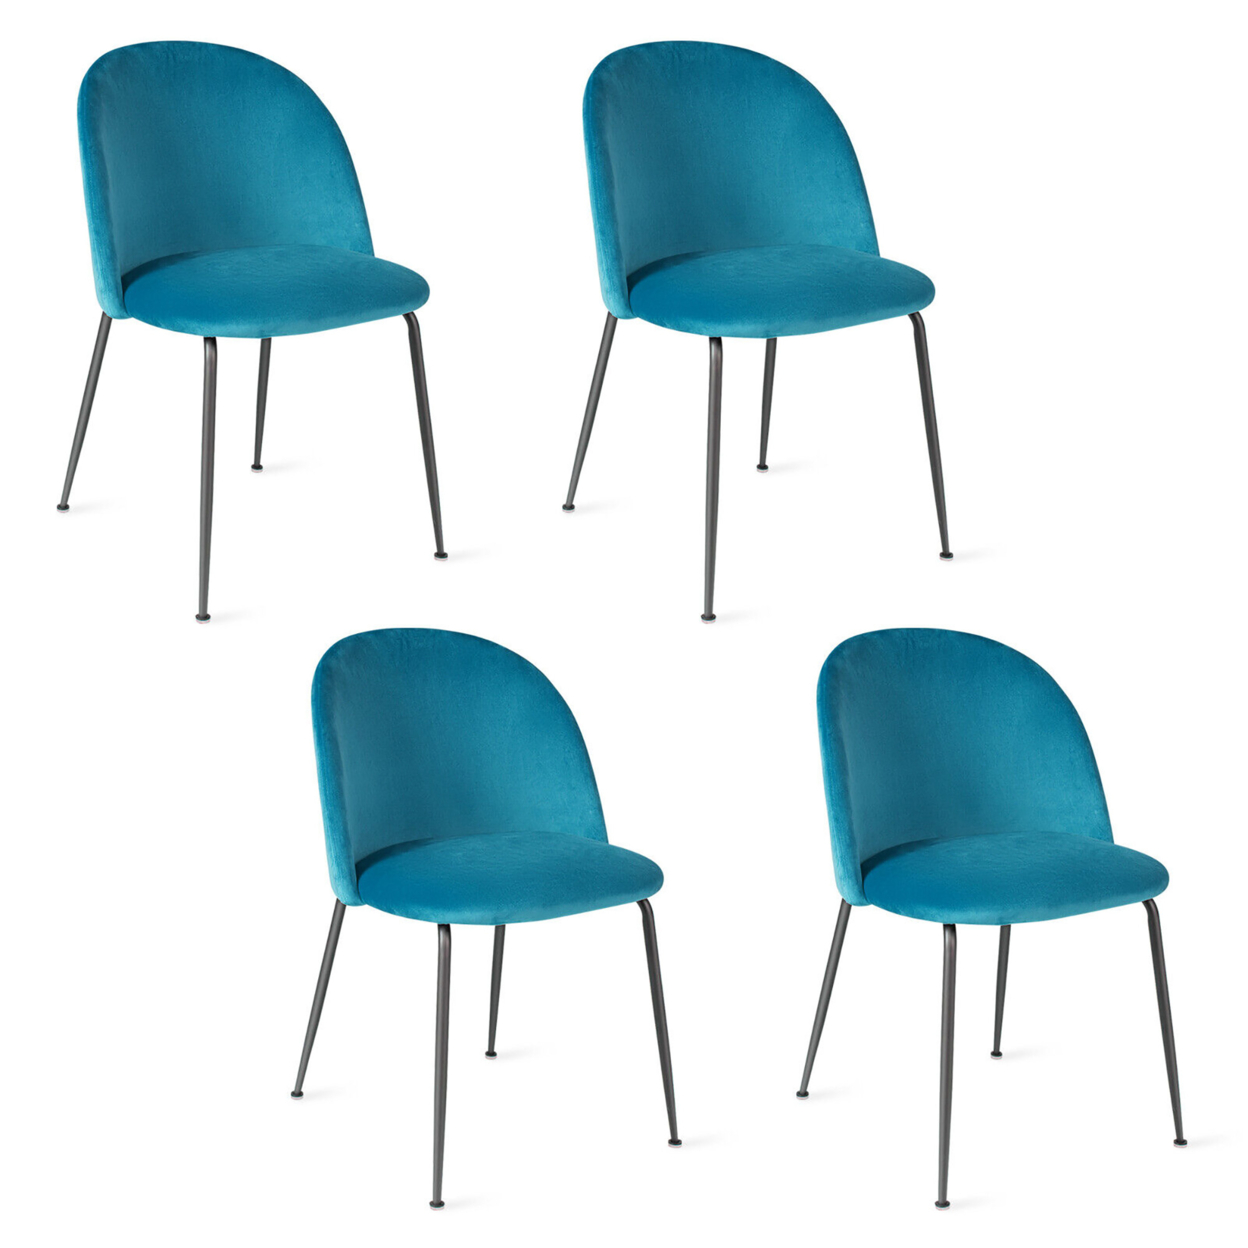 Dining Chair Set Of 4 Upholstered Velvet Chair Set W/ Metal Base For Living Room - Teal Blue